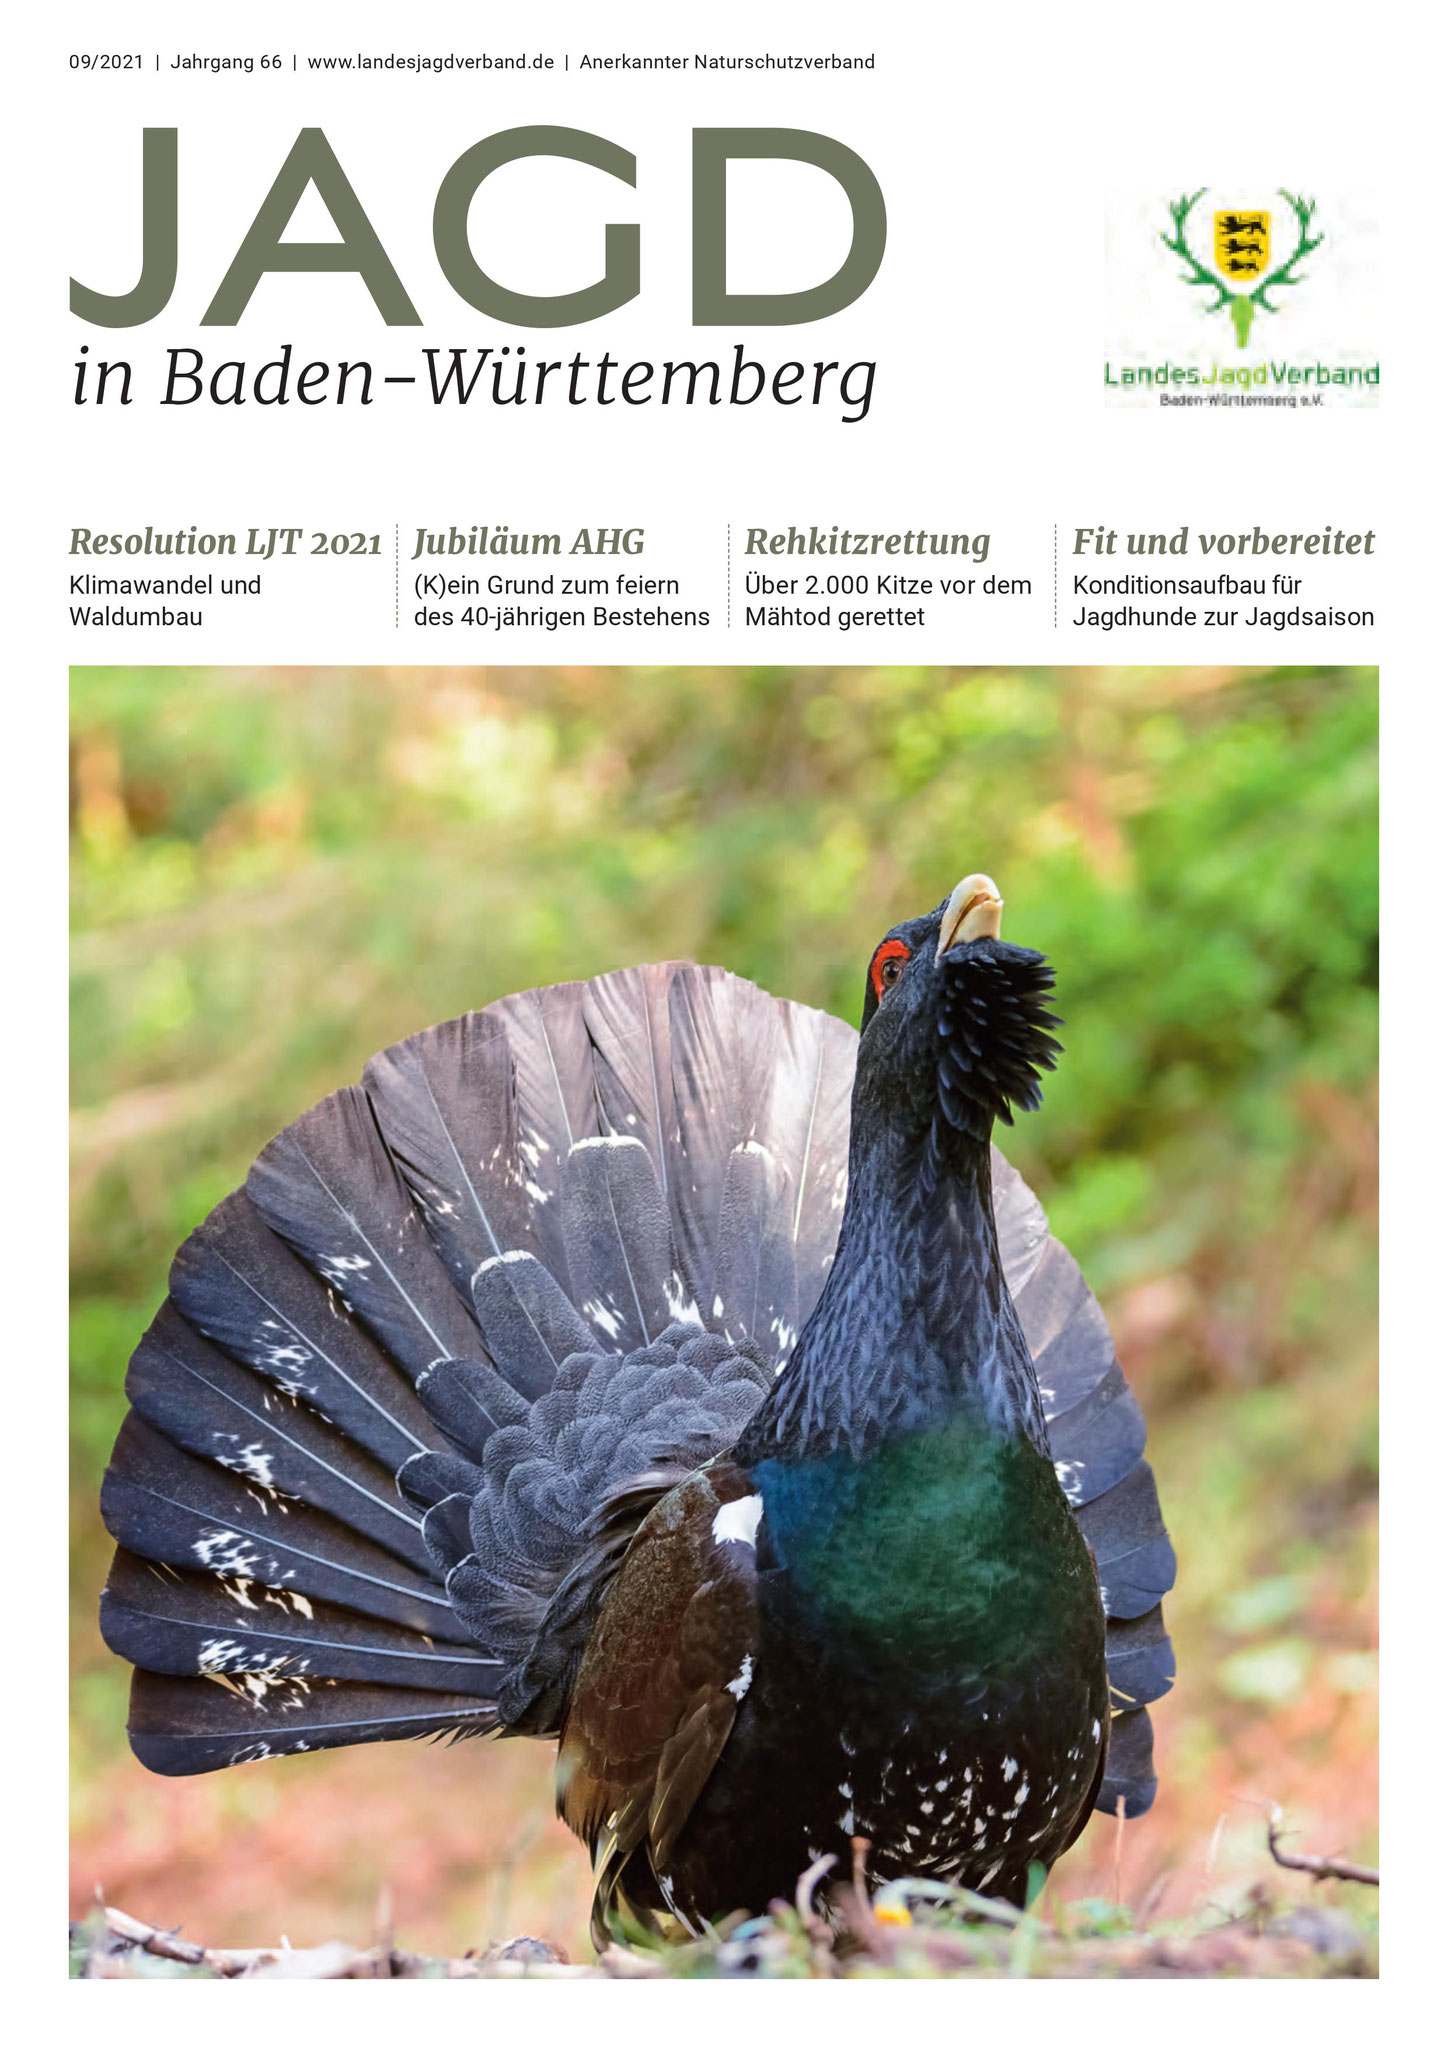 Titelseite der Jagd in Baden-Württemberg Nr. 9/2021